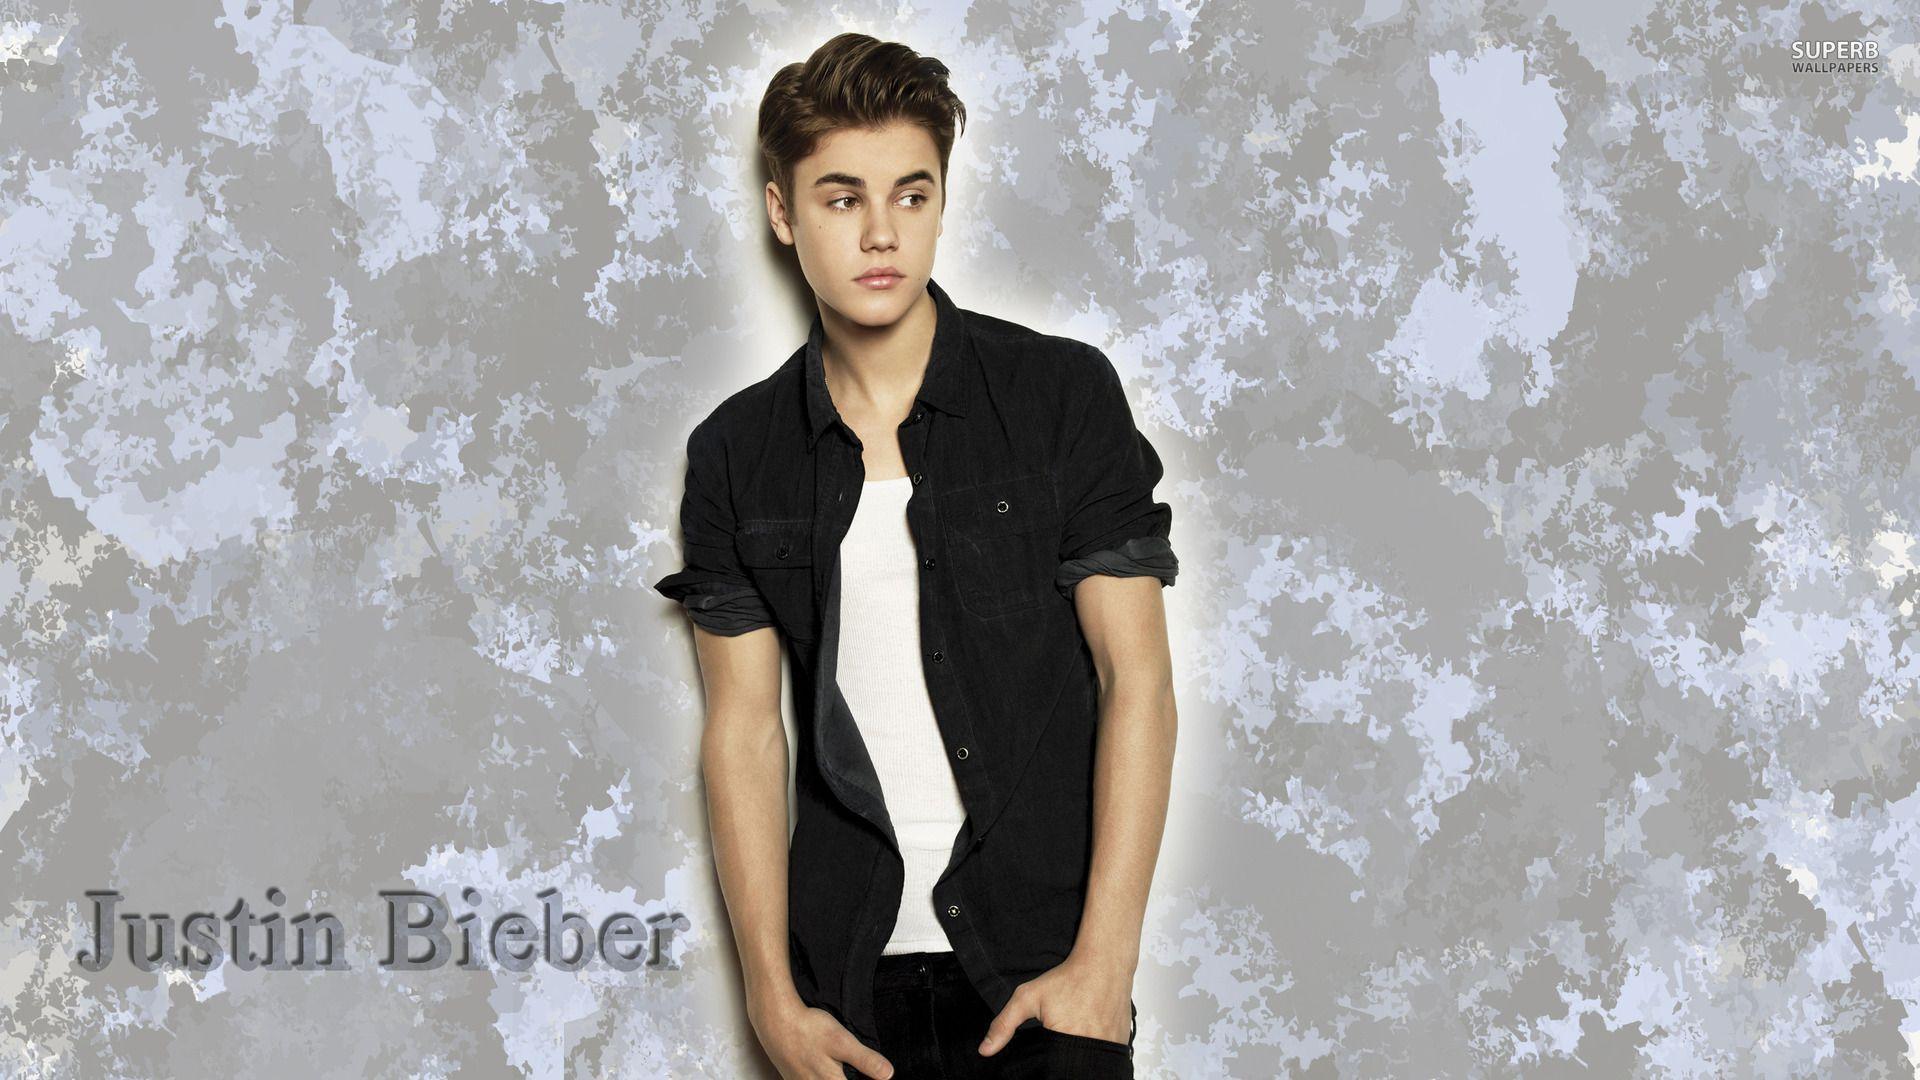 Justin Bieber Singing Wallpaper 40178 in Celebrities M